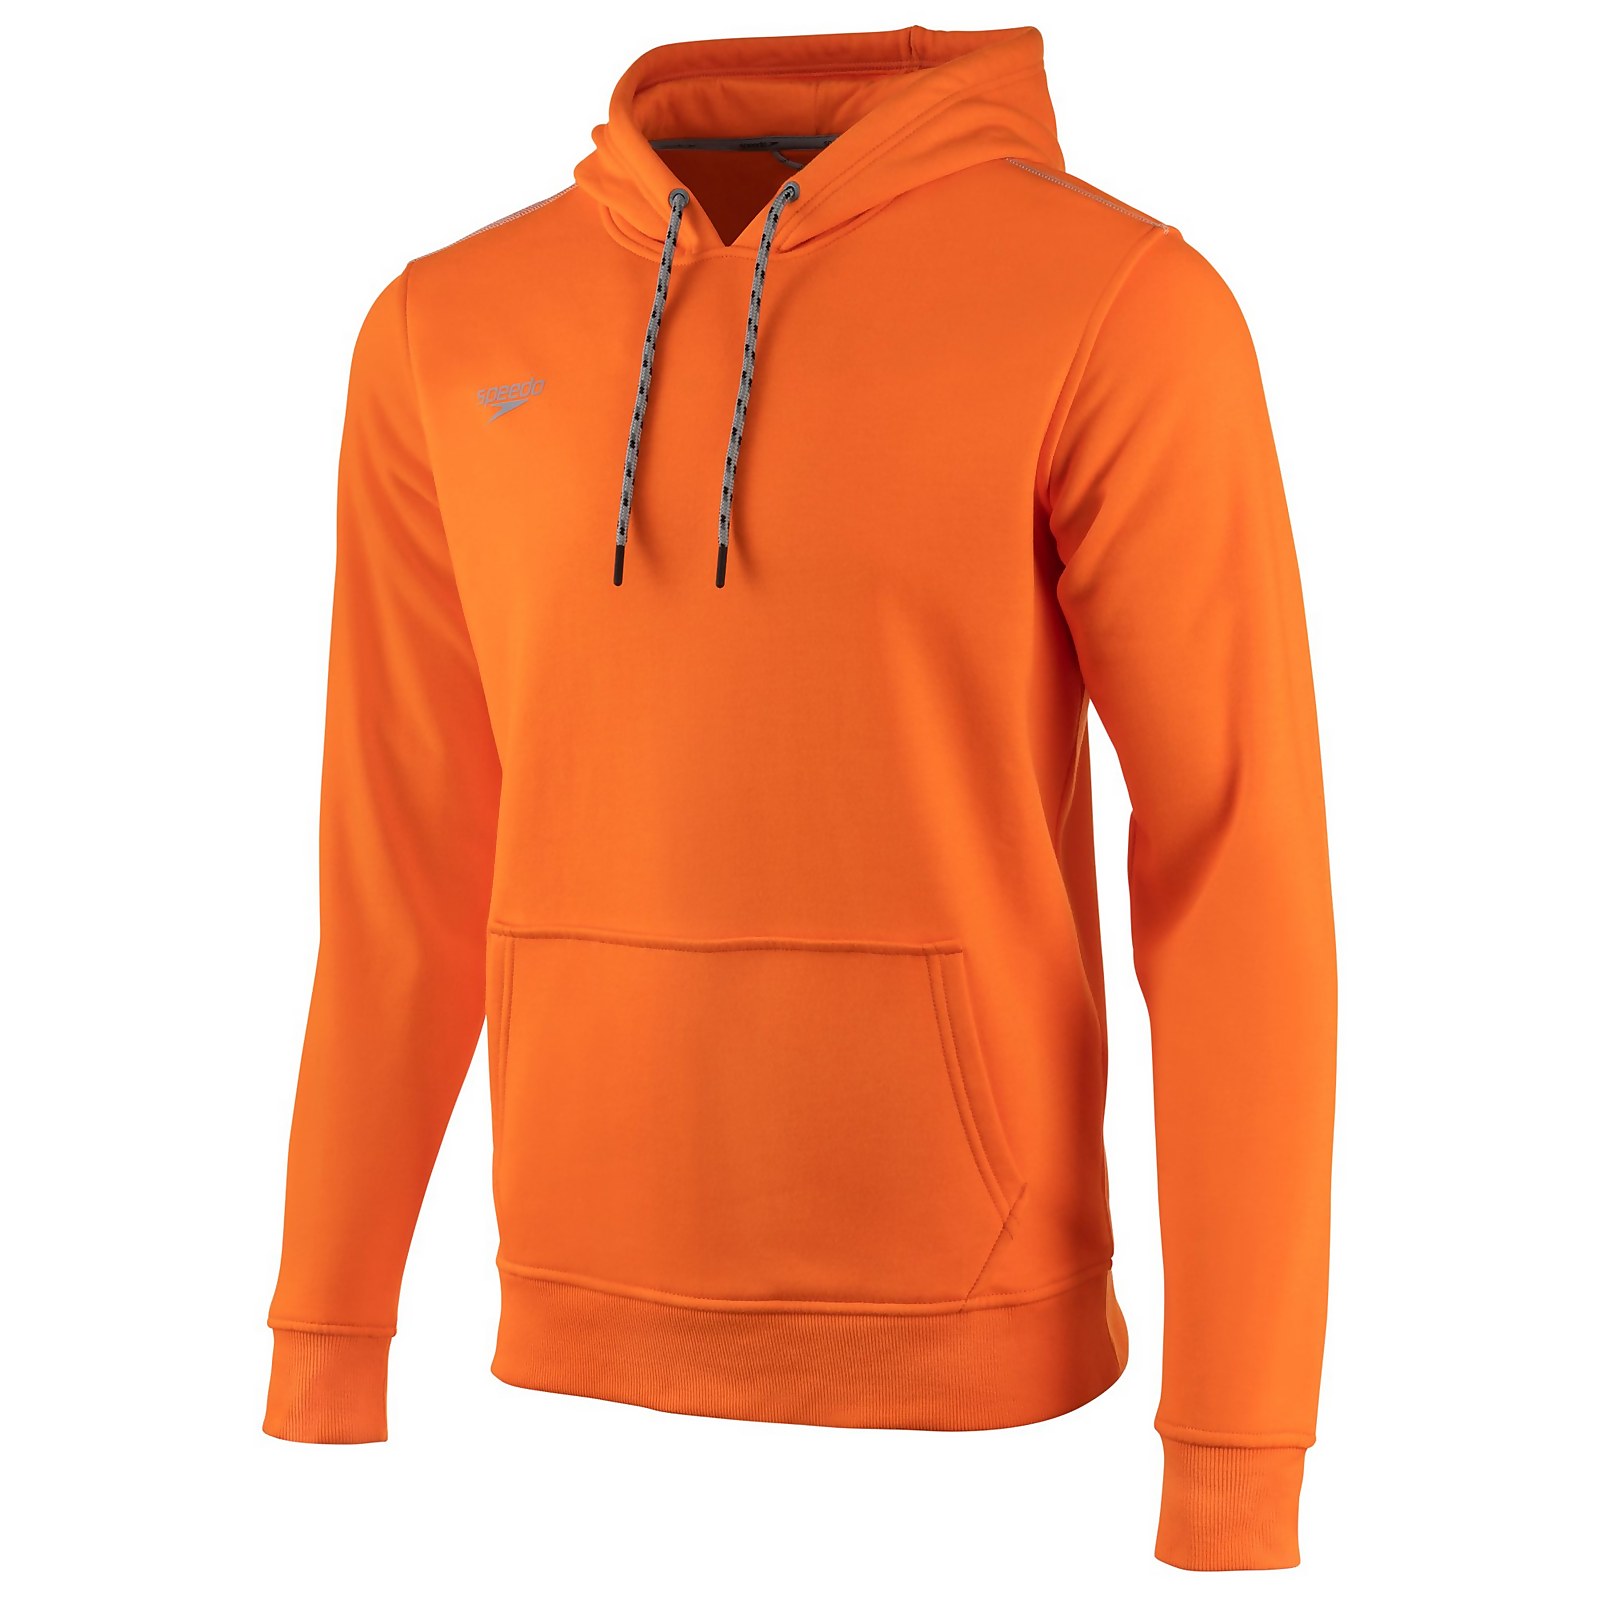 Speedo  Long Sleeve Hooded Sweatshirt - S    : Orange